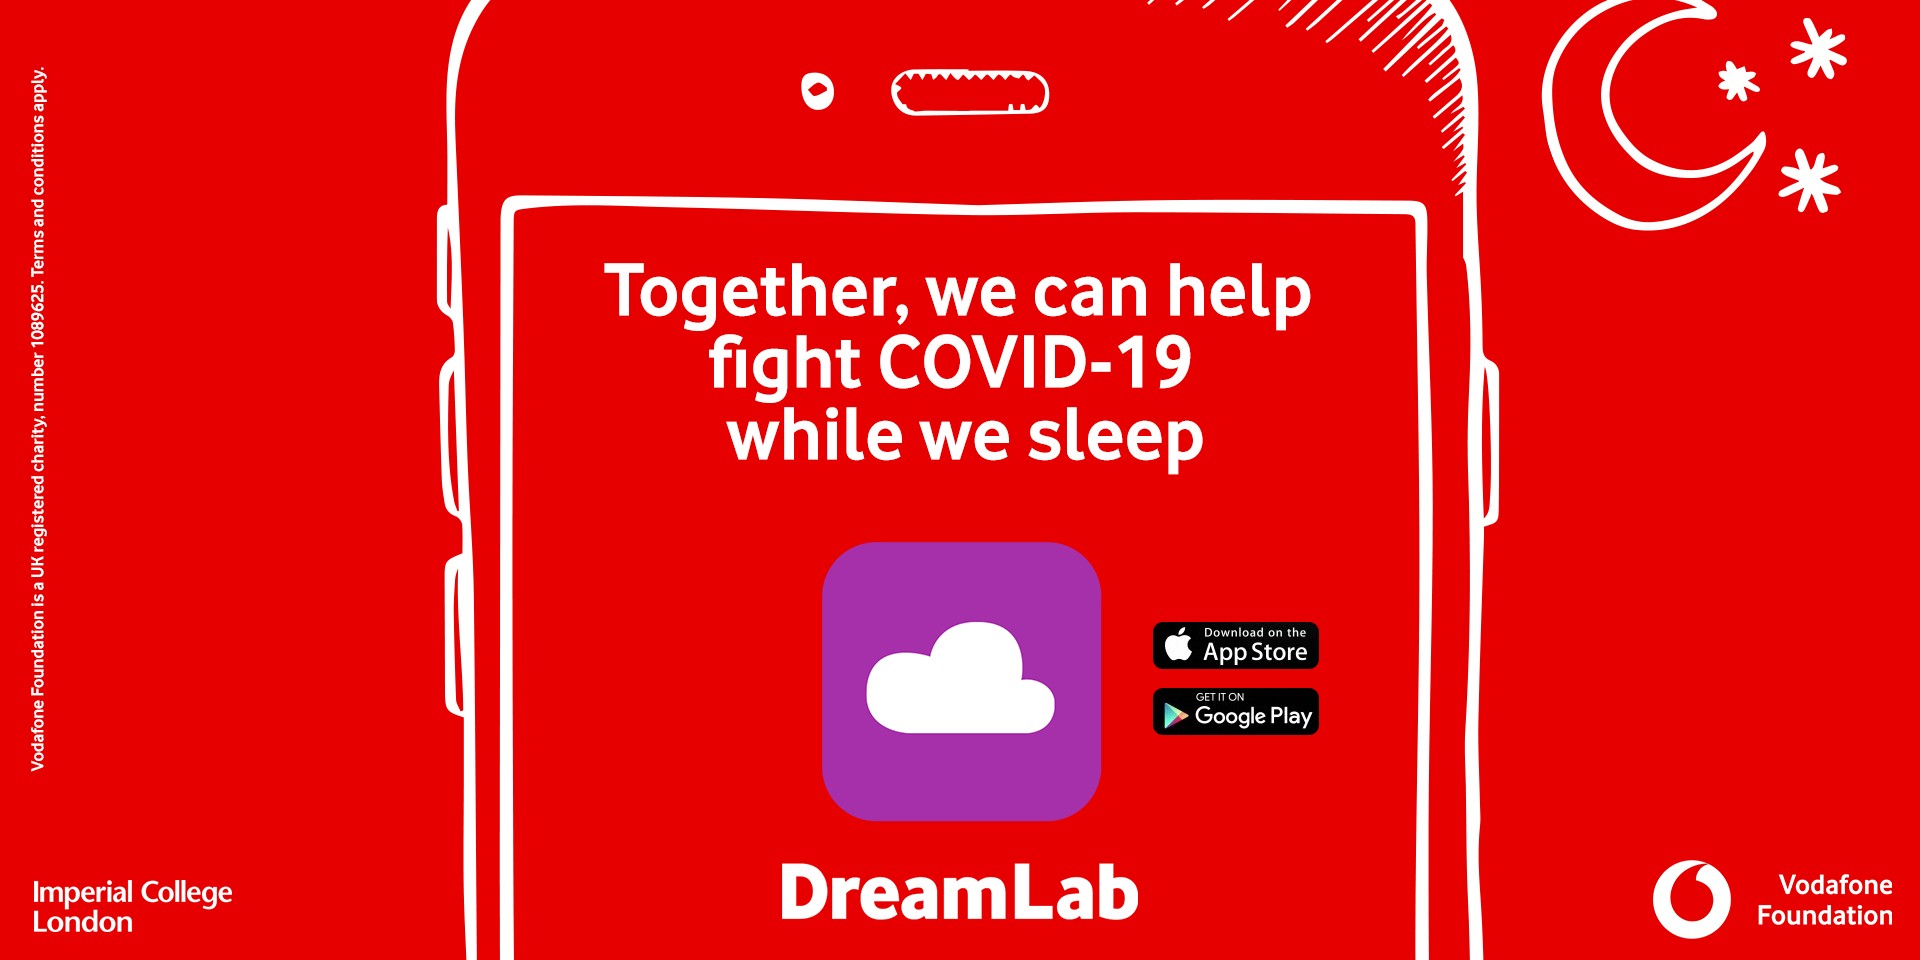 Vodafone promote DreamLab app to help fight coronavirus